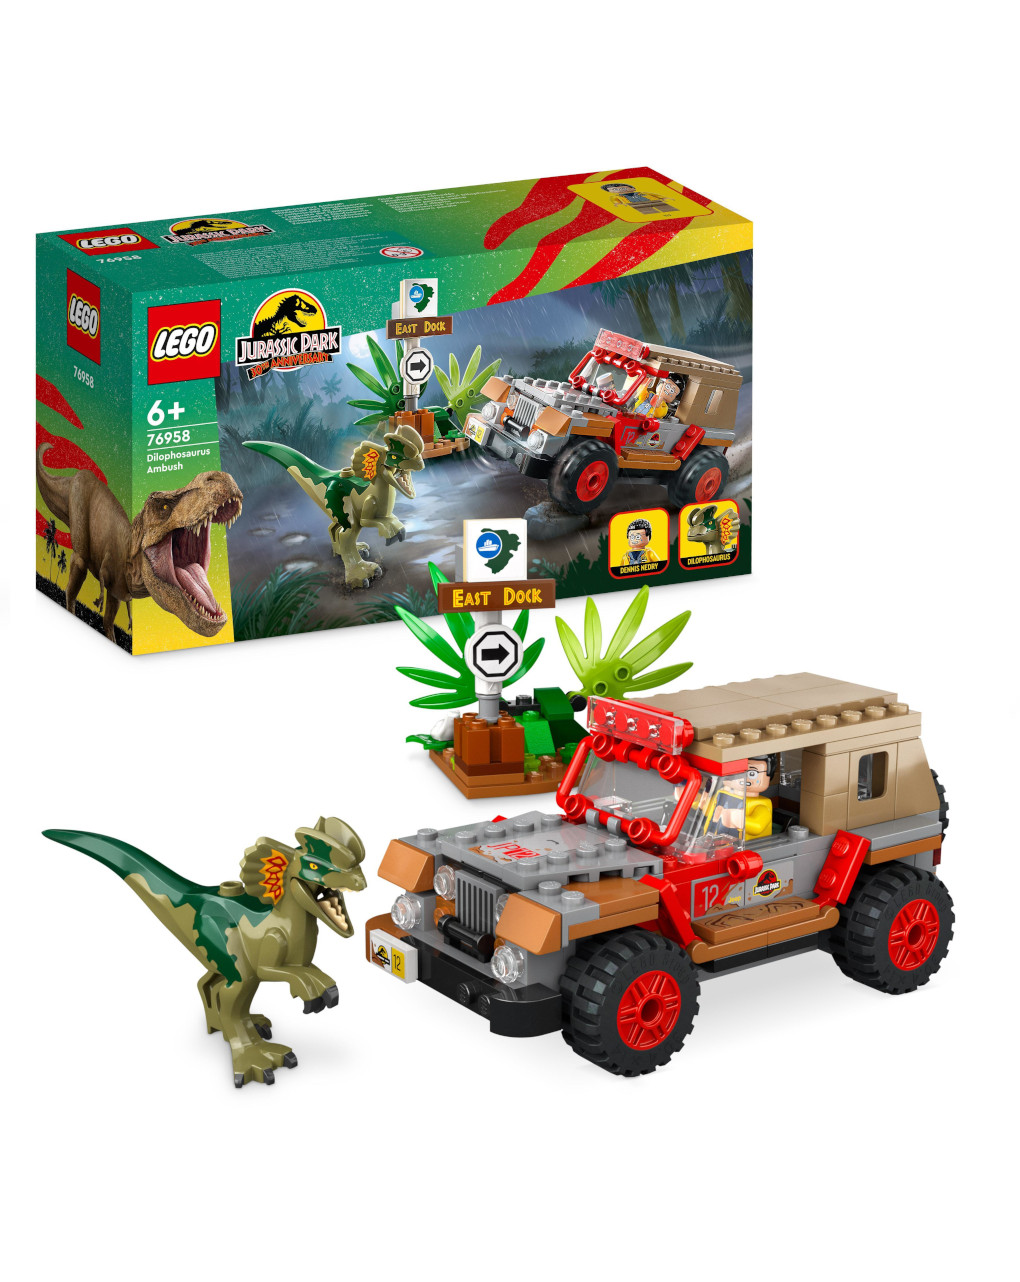 Emboscada do dilophosaurus 76958 - lego jurassic park - Lego Jurassic Park/W